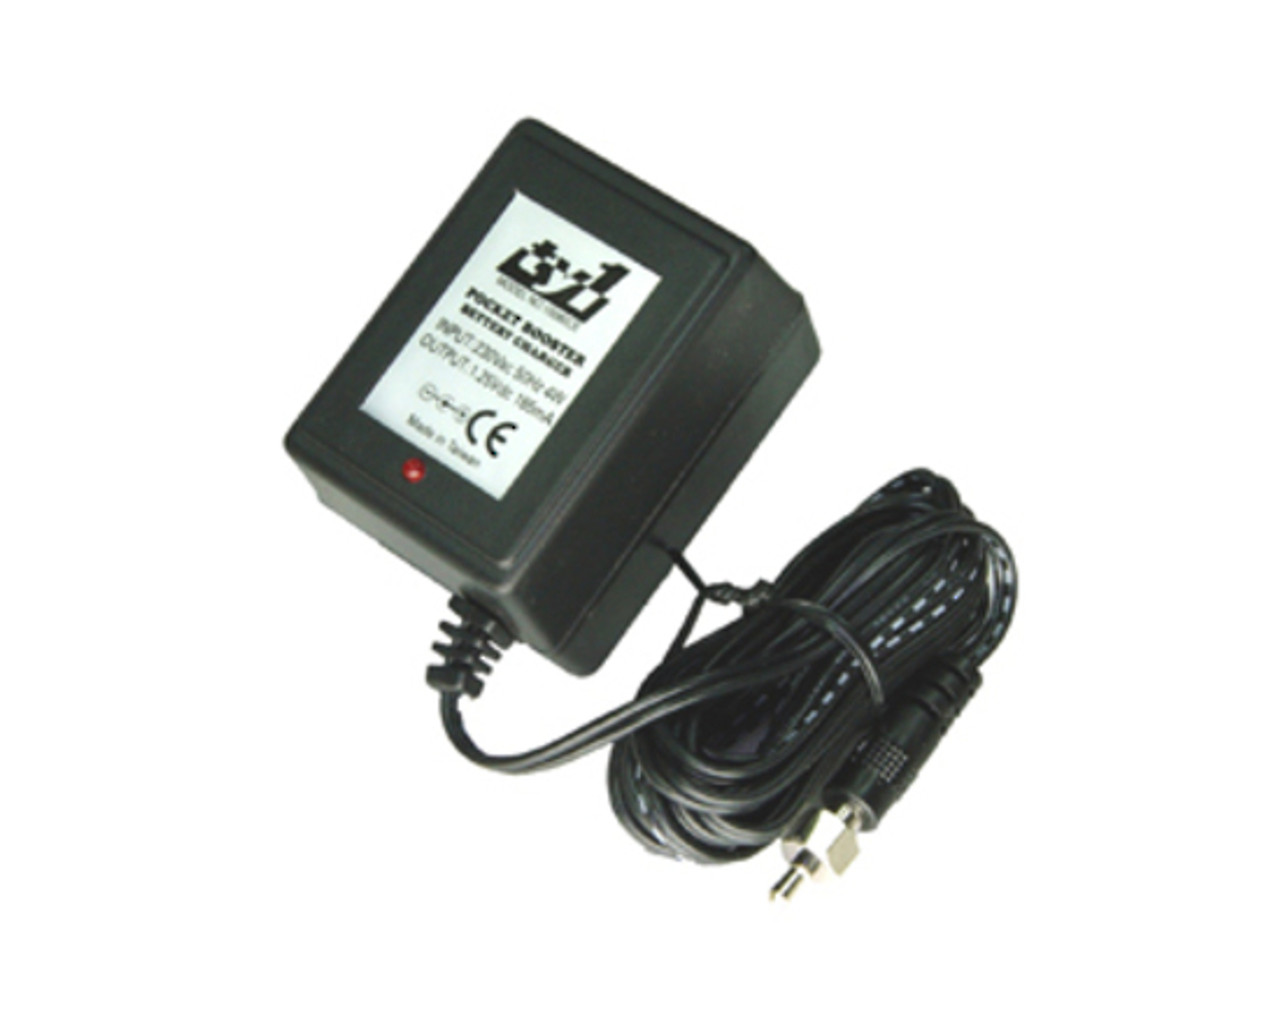 1.2v AC adaptor Charger Glow plug